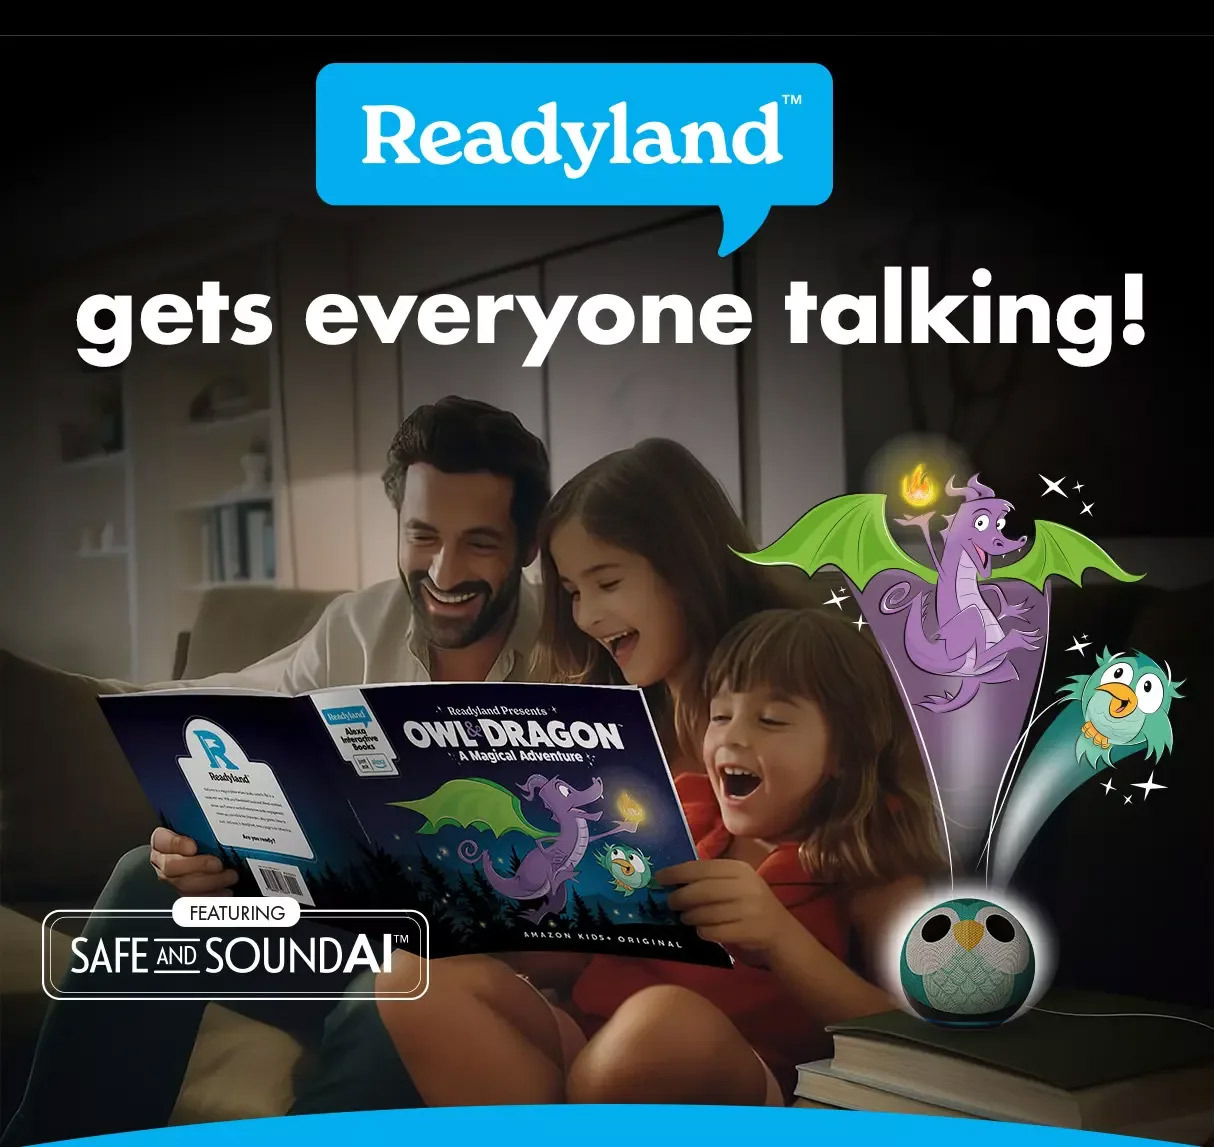 Readyland gets everyone talking